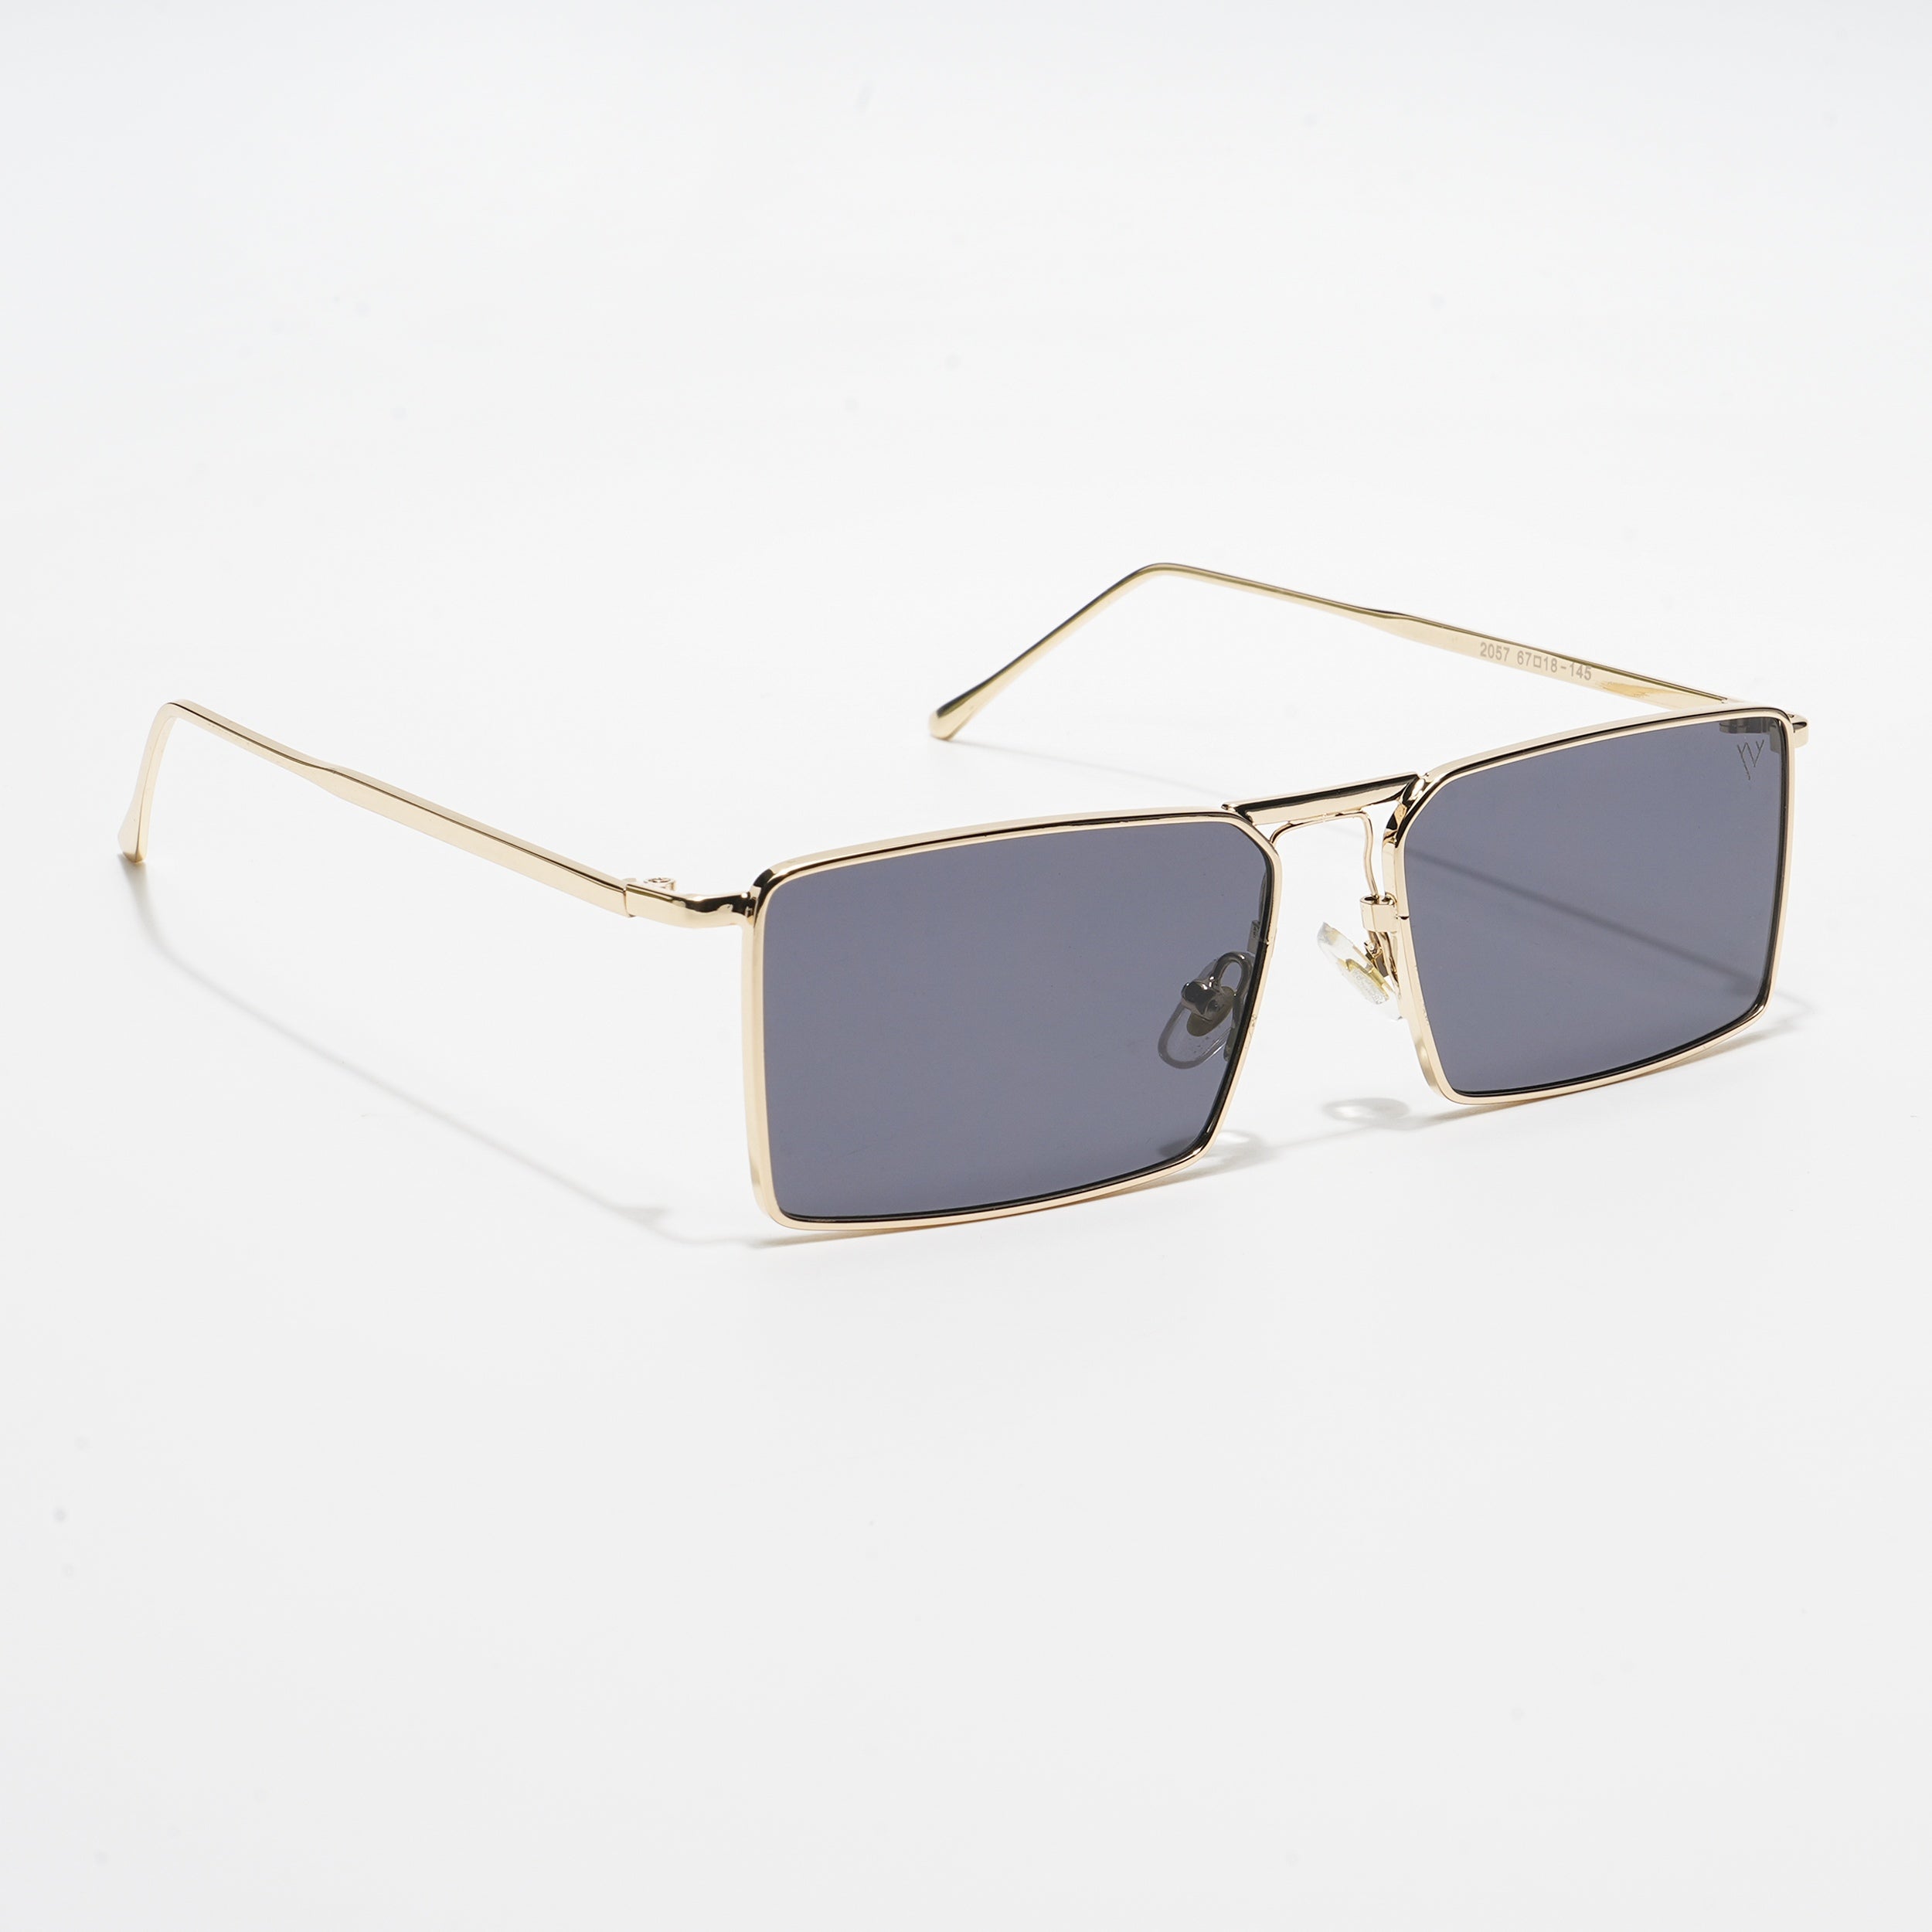 Voyage Black Gold Rectangular Sunglasses - MG3572